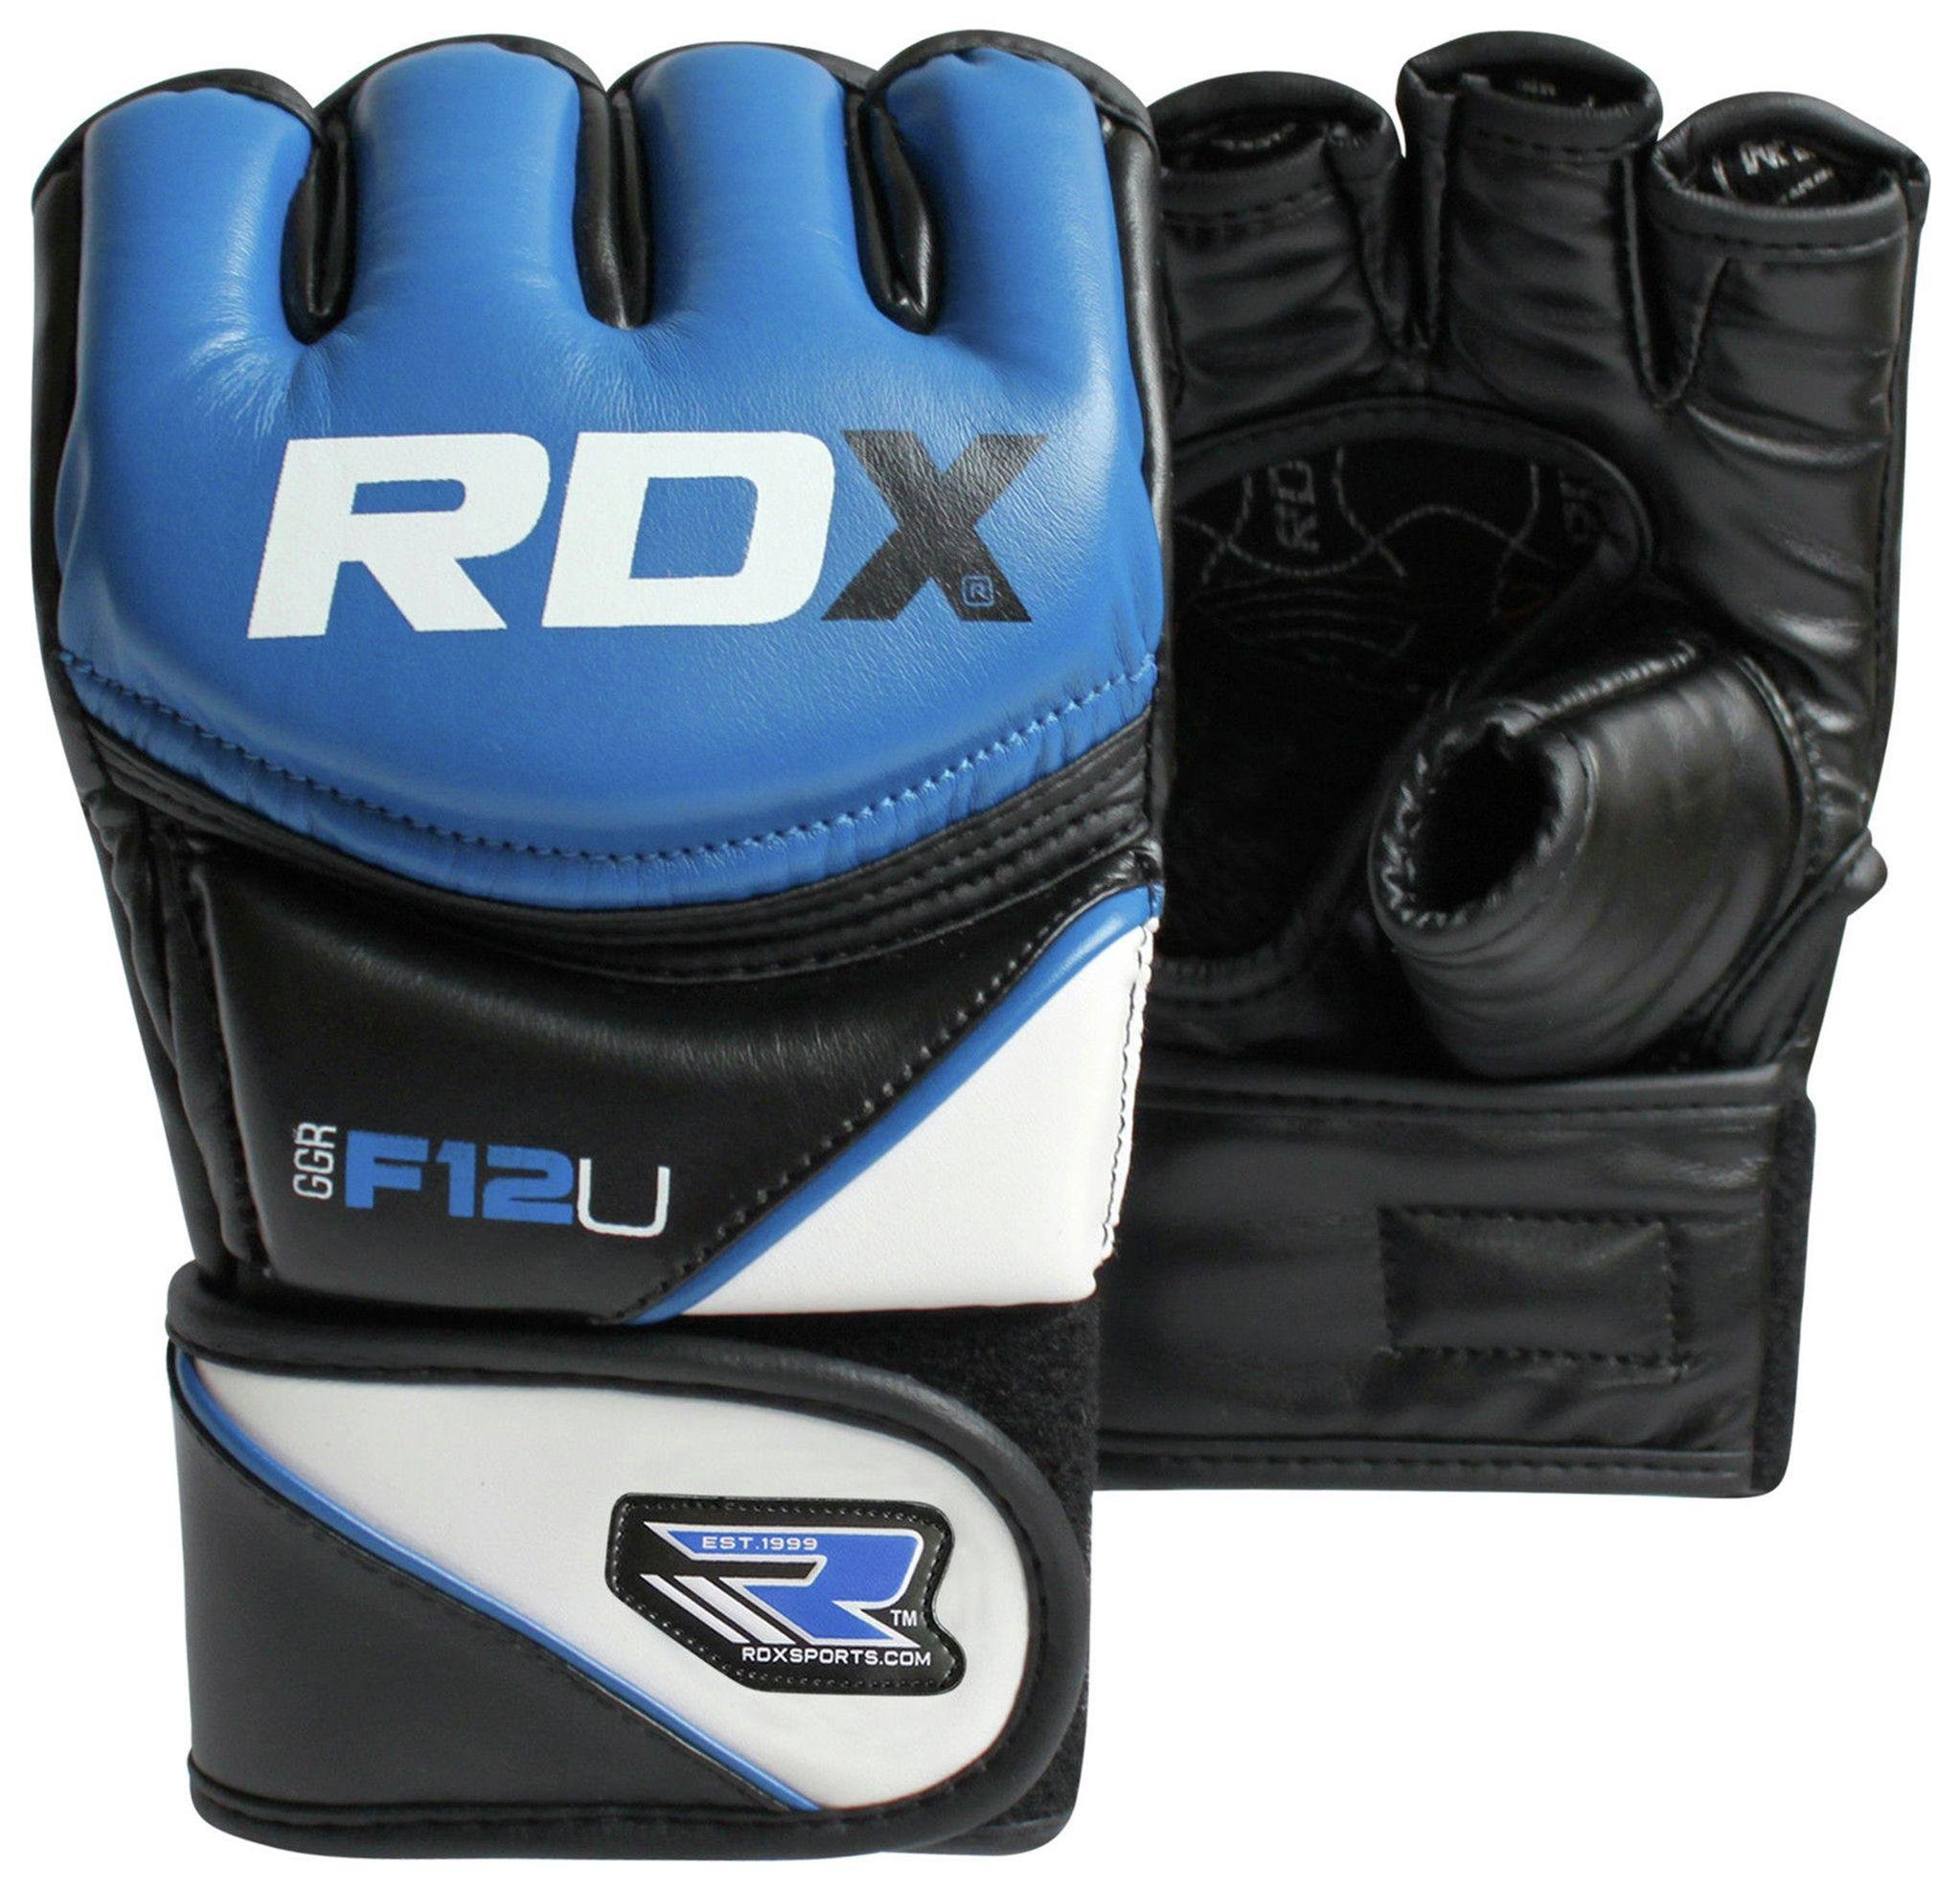 RDX Synthetic Leather MMA Gloves Blue - Large/Extra Large